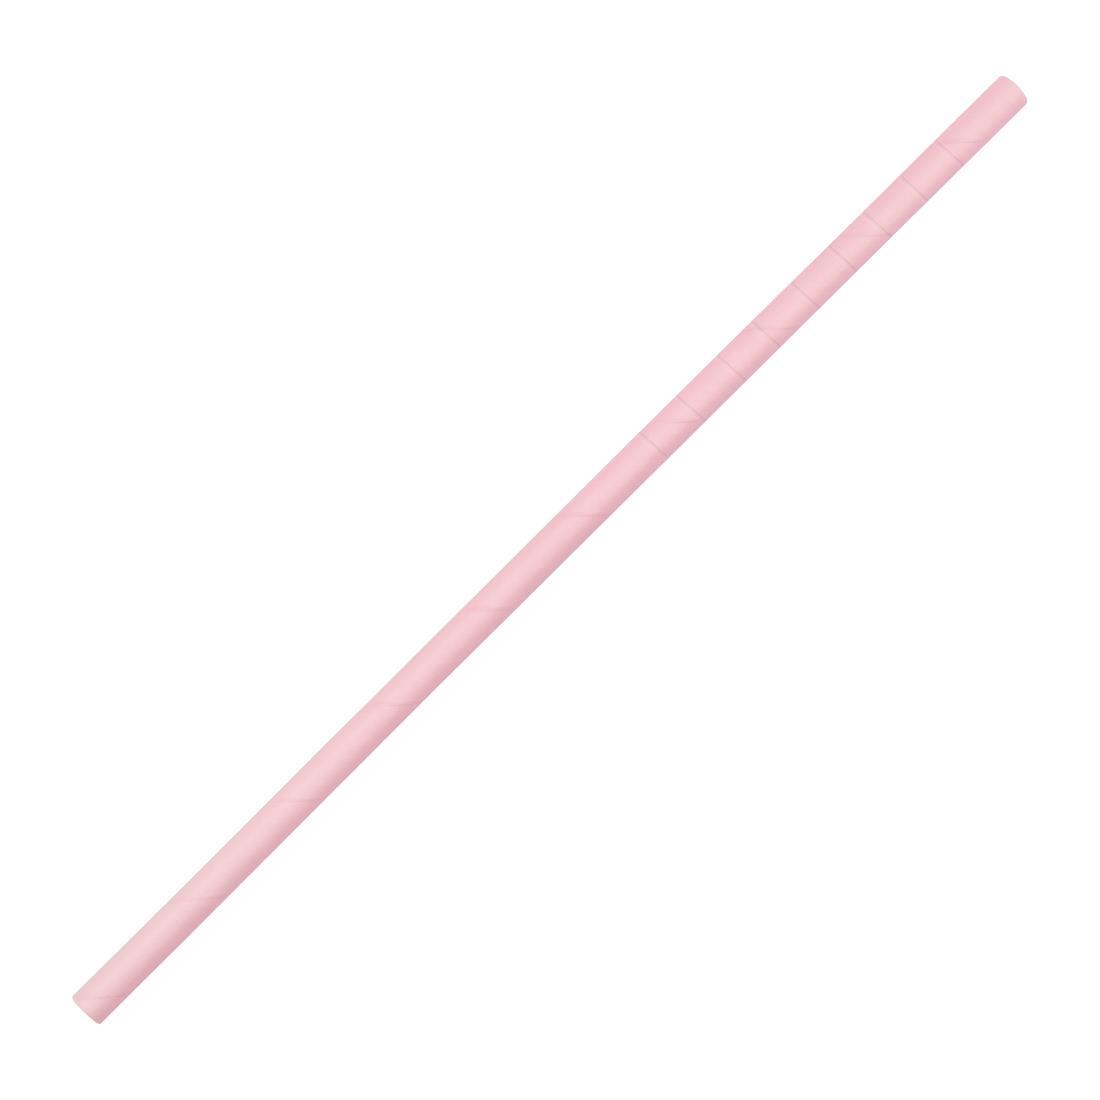 Fiesta Compostable Bendy Paper Straws Pink (Pack of 250) - FB144  - 1